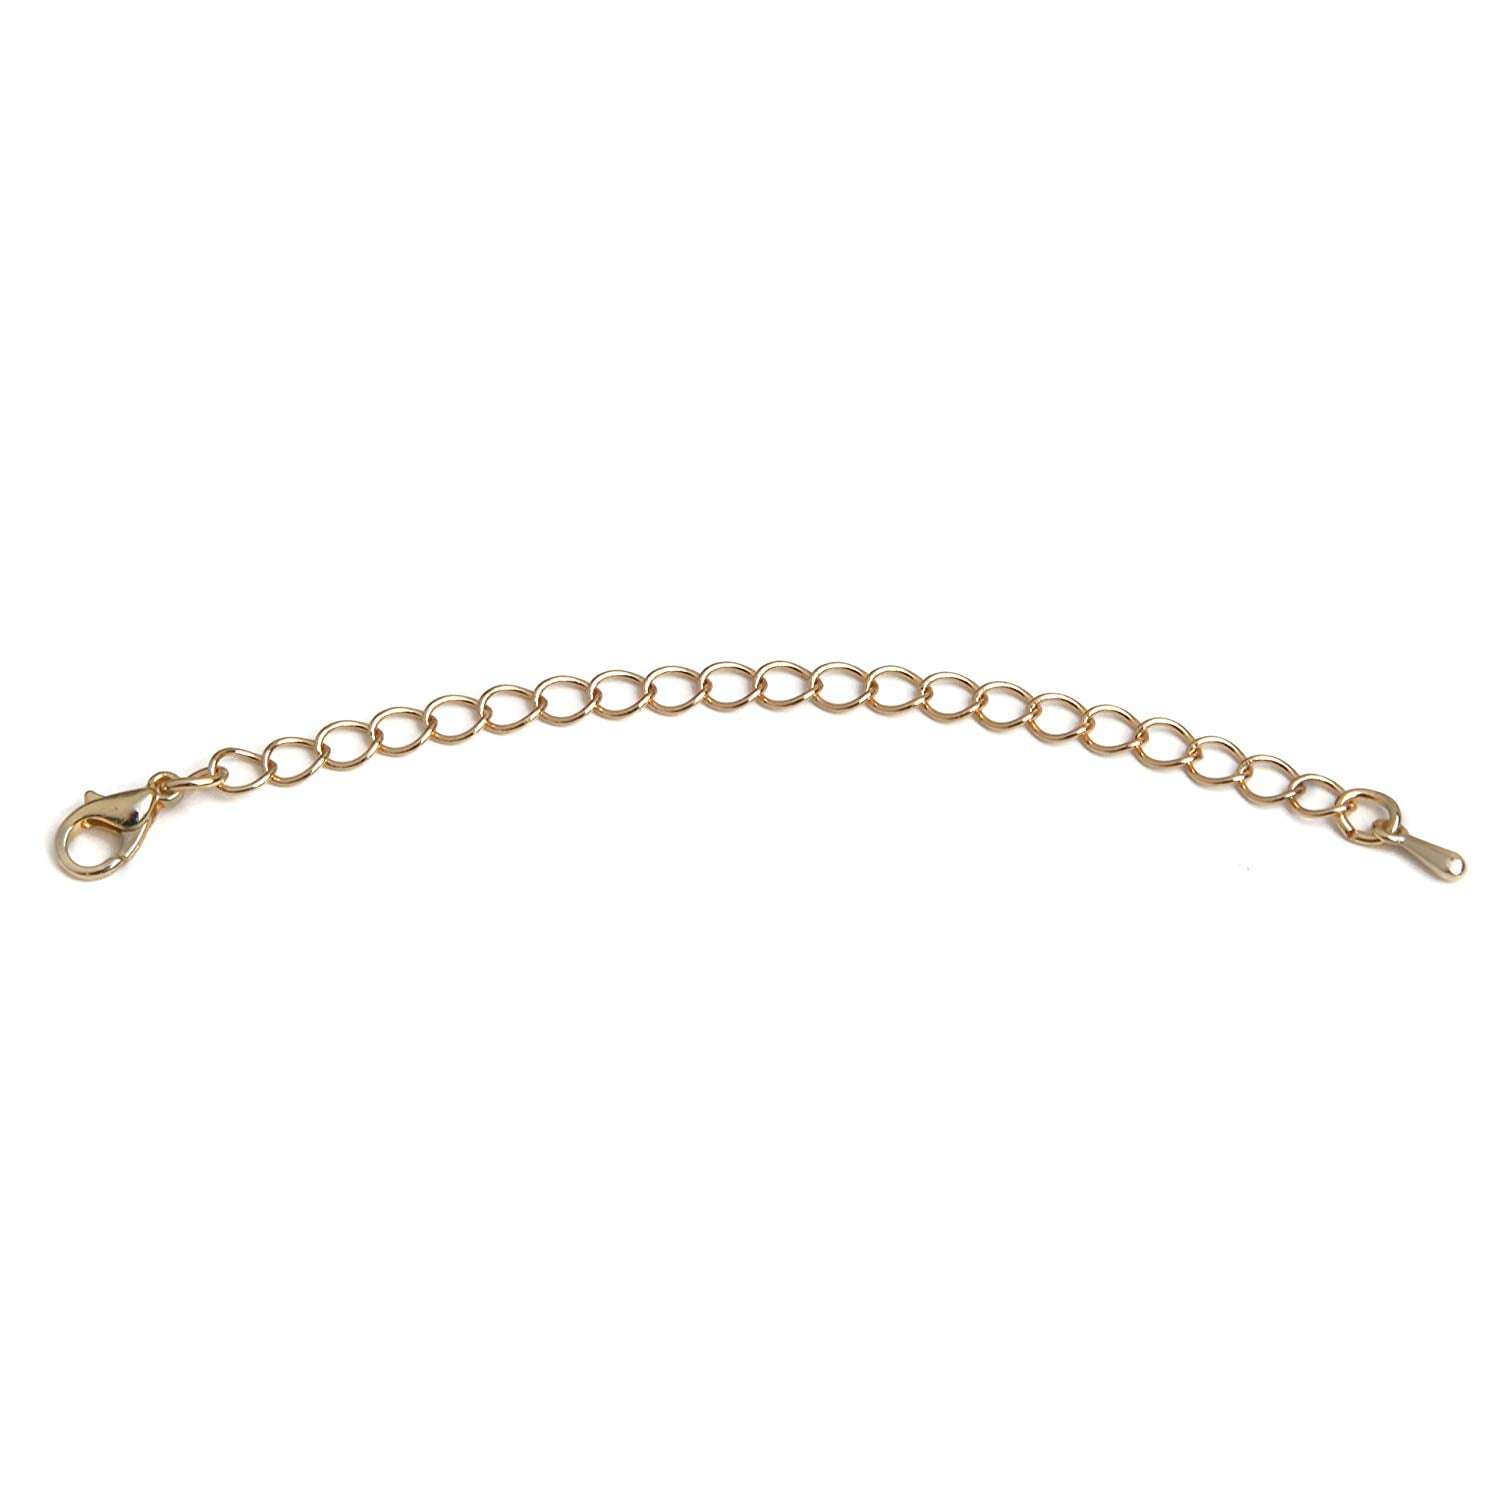 E'arrs - Necklace Extender | Chain Link | Gold Extend-A-Link | 1 Piece ...